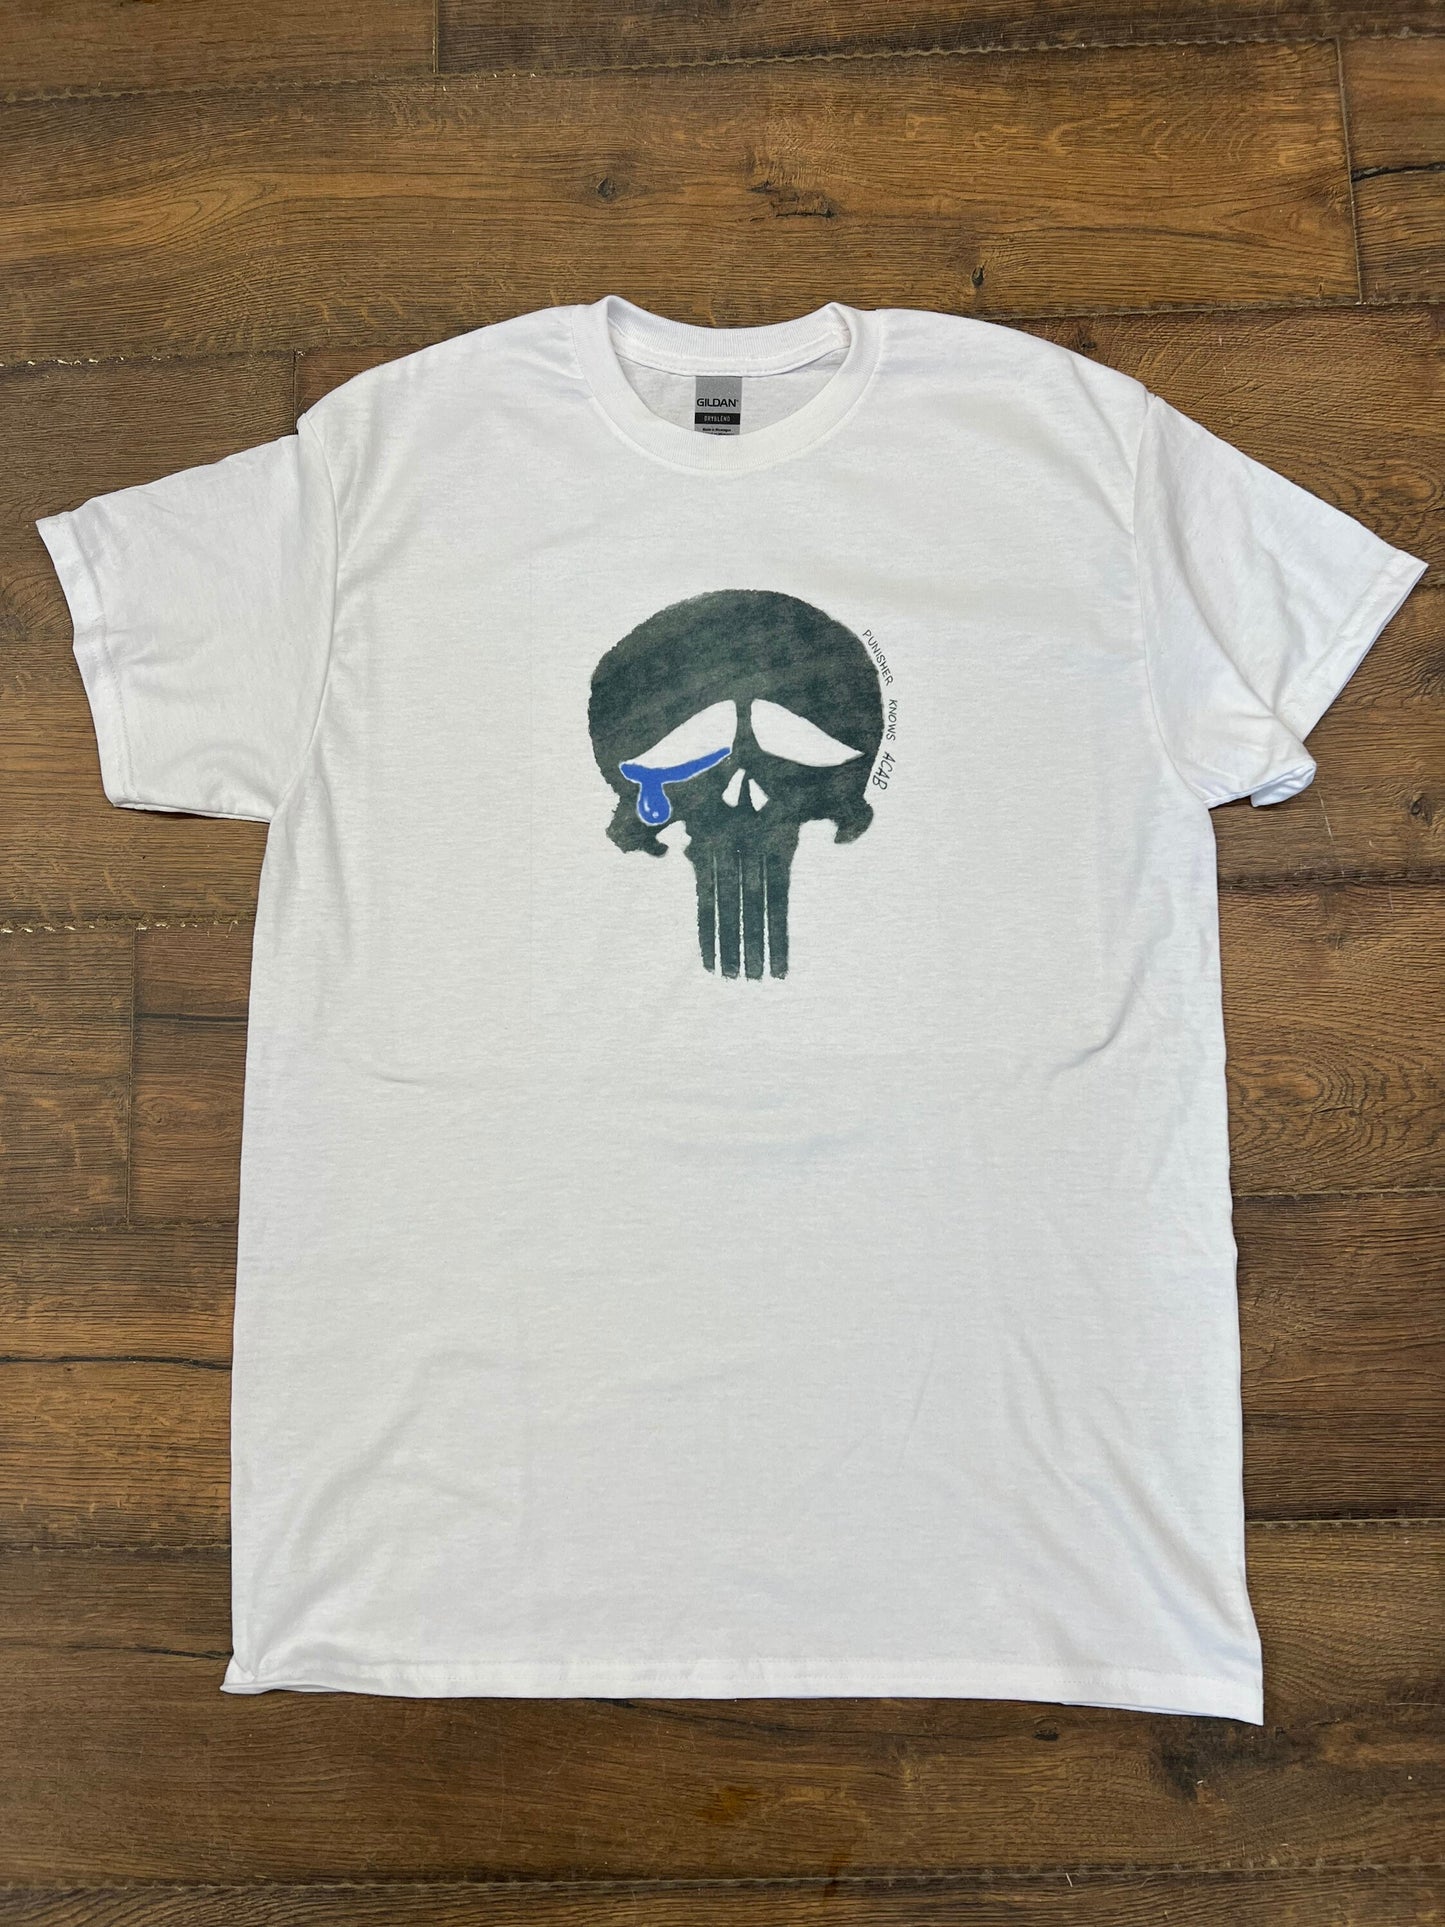 ACAB Punisher - Thin Blue Cryin’ - T shirt